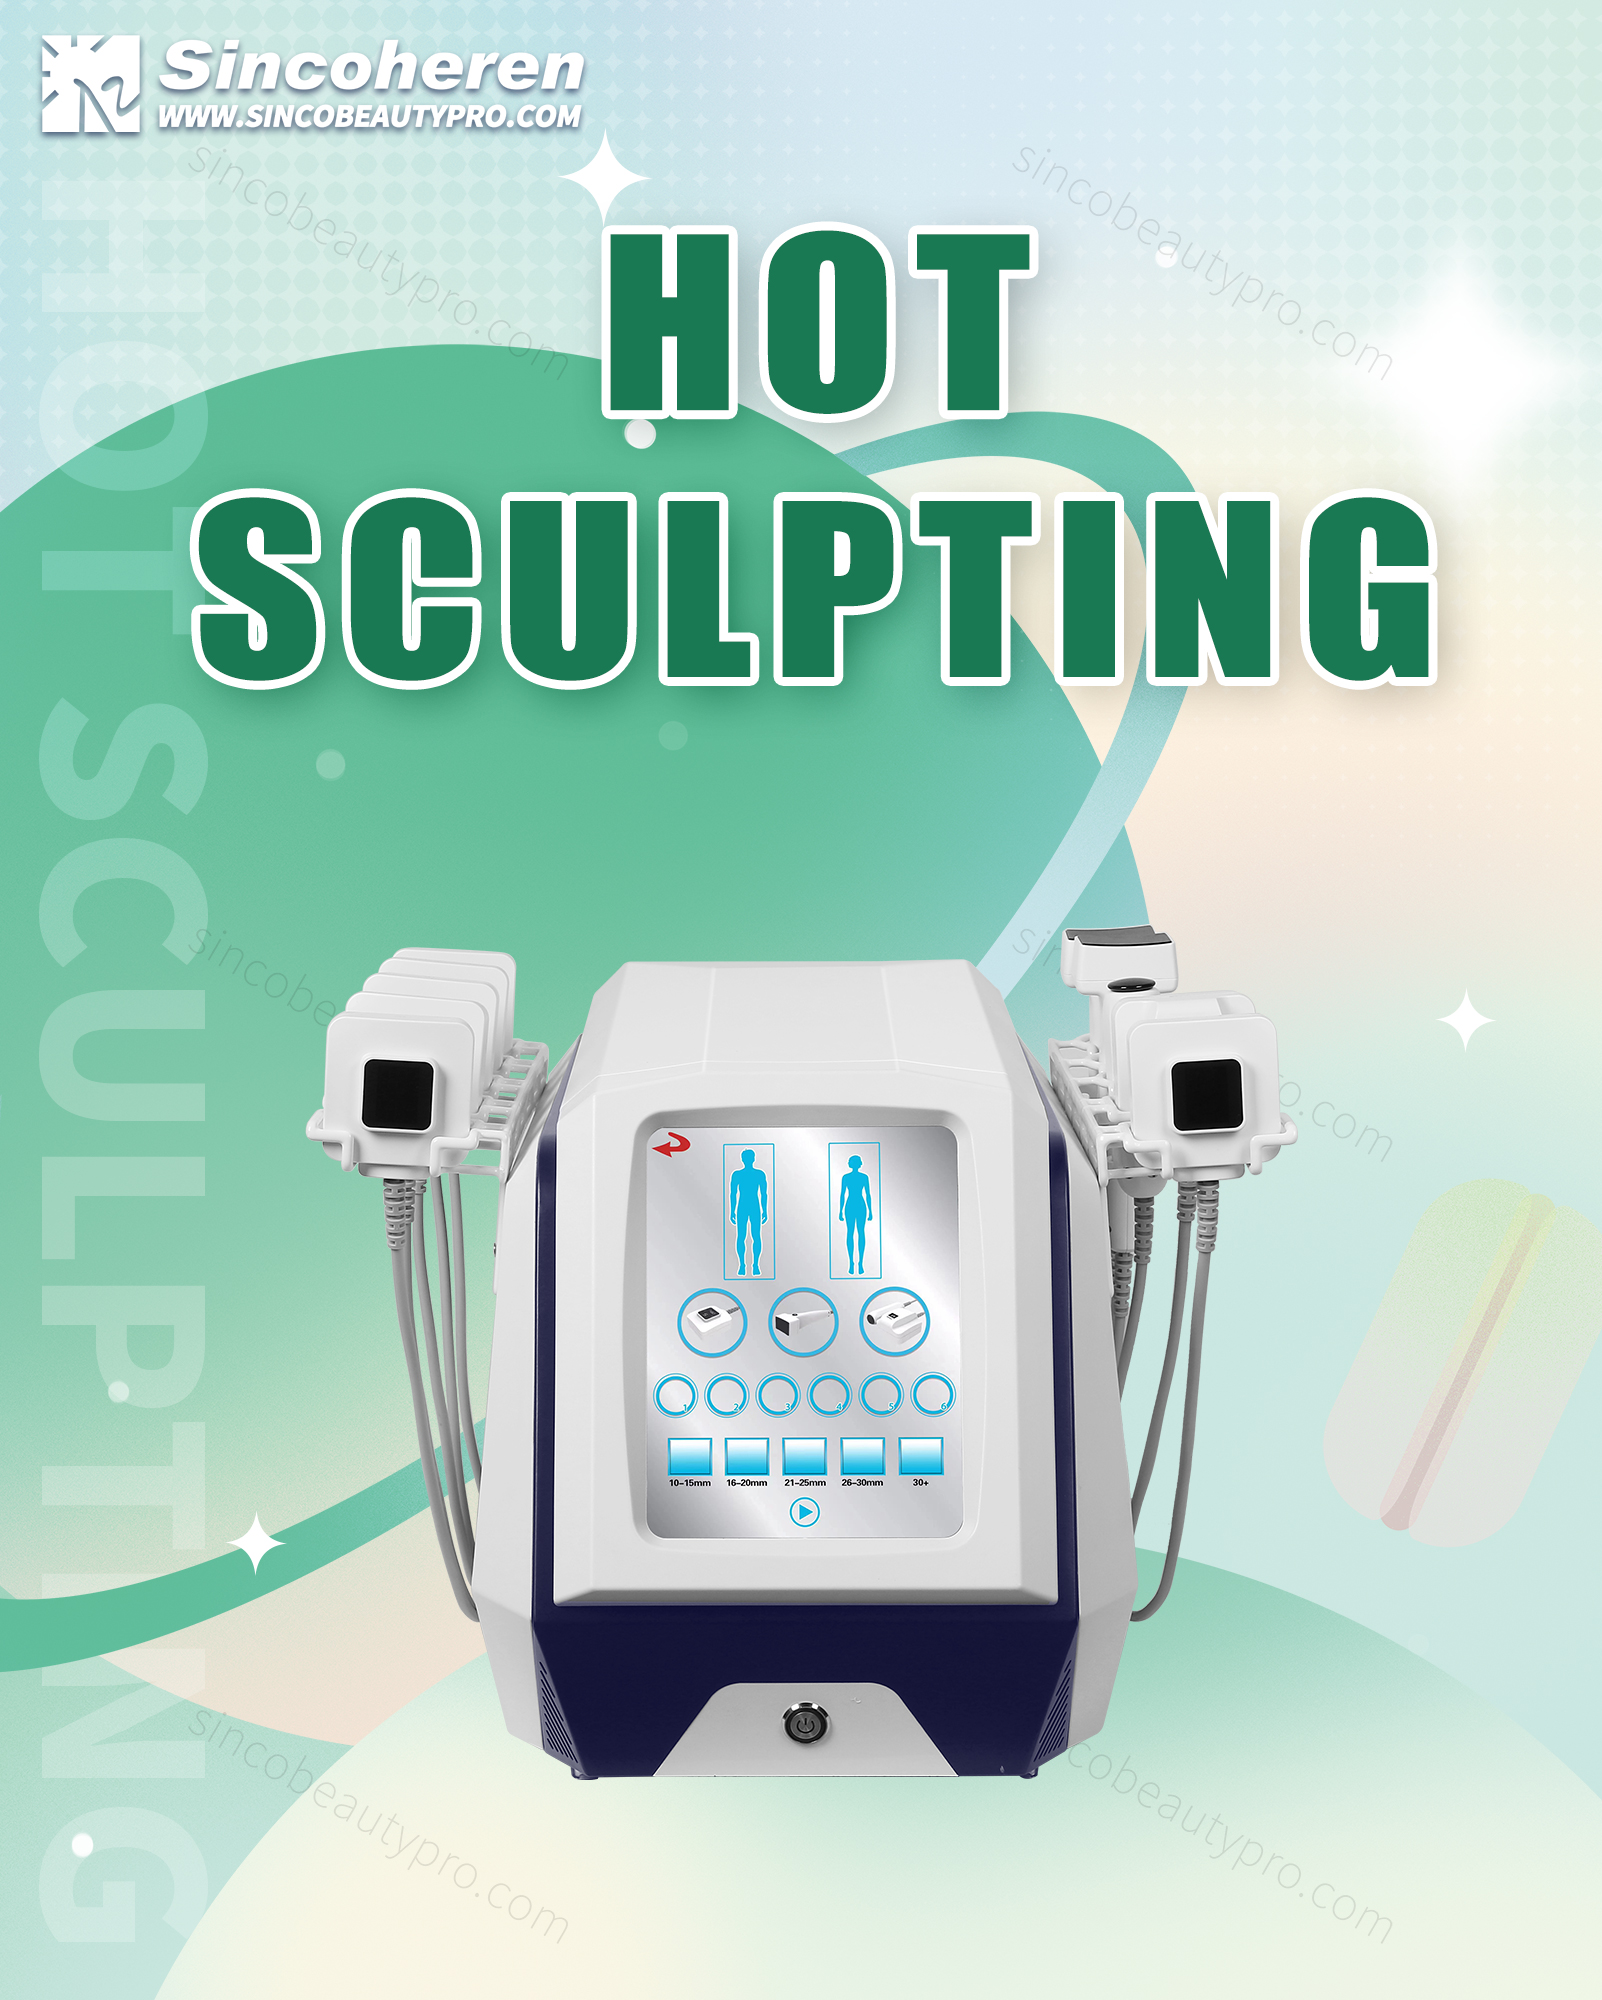 RF Hot Sculpting Fat Reduction Machine for 24-27% Fat Loss